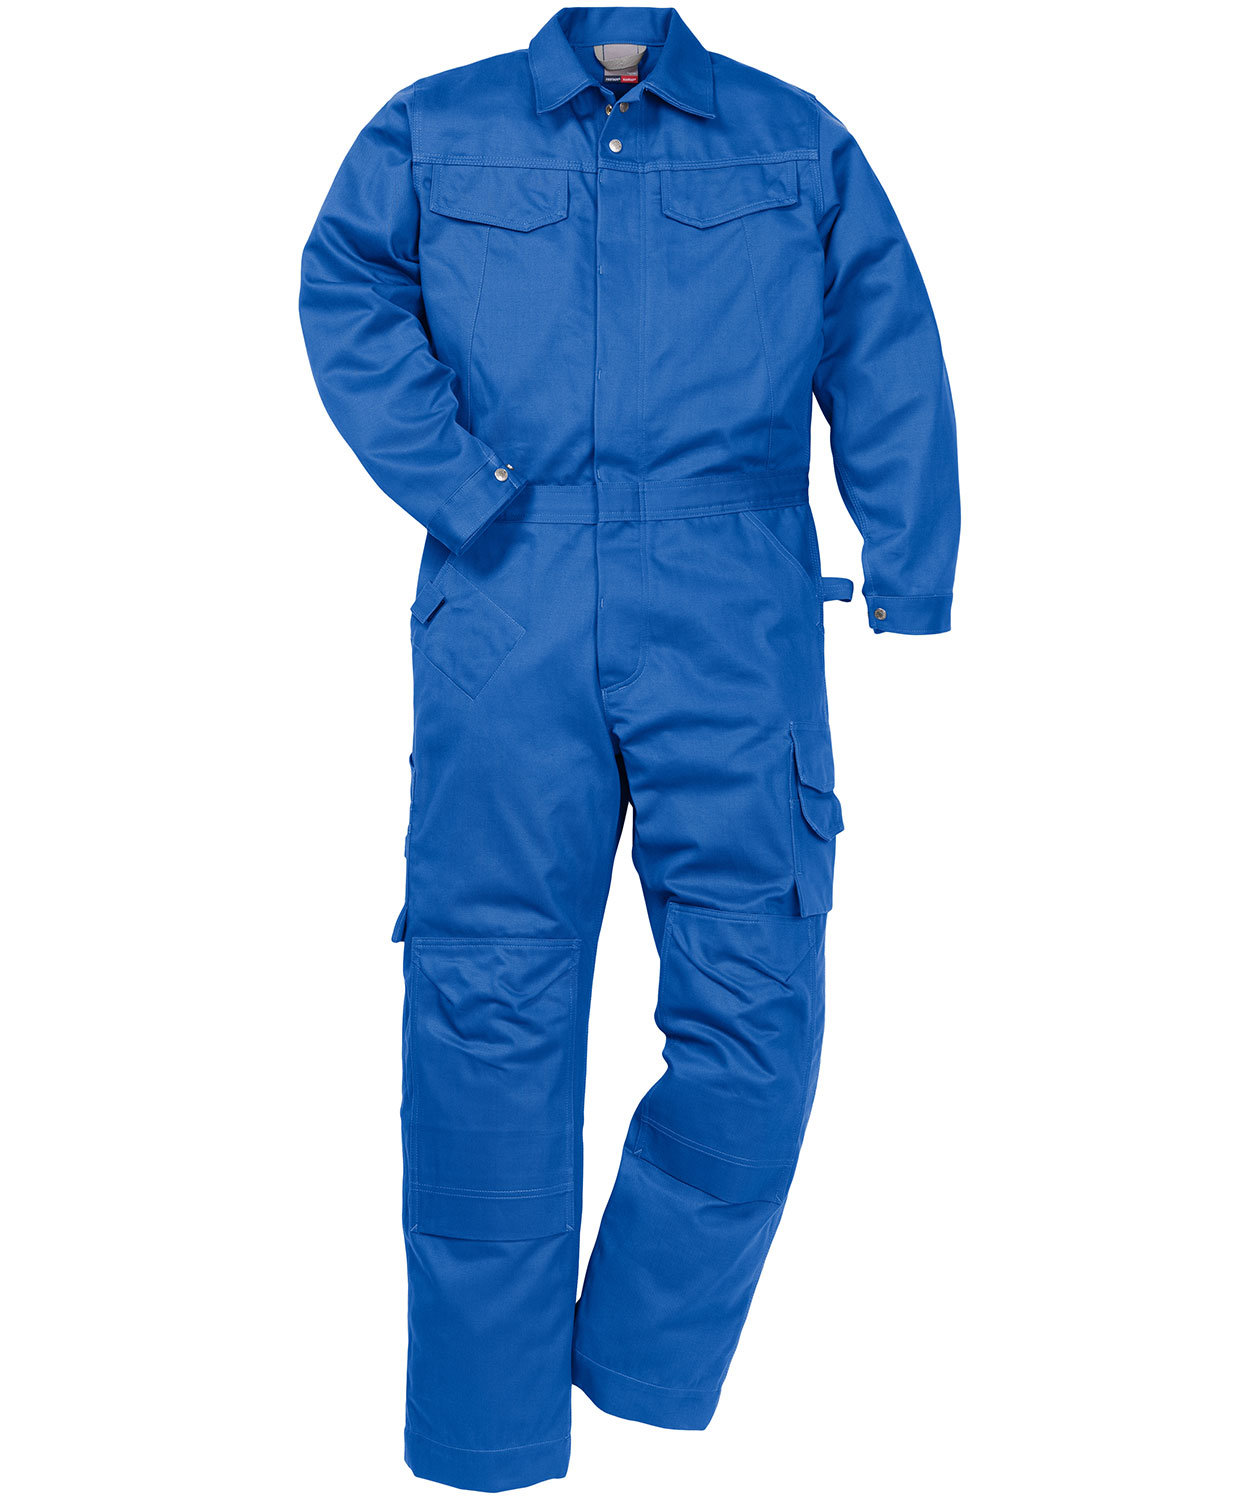 Homme Femme Boilersuit combinaison Overall Workwear Tuff Travail Bleu Marine Noir Royal 